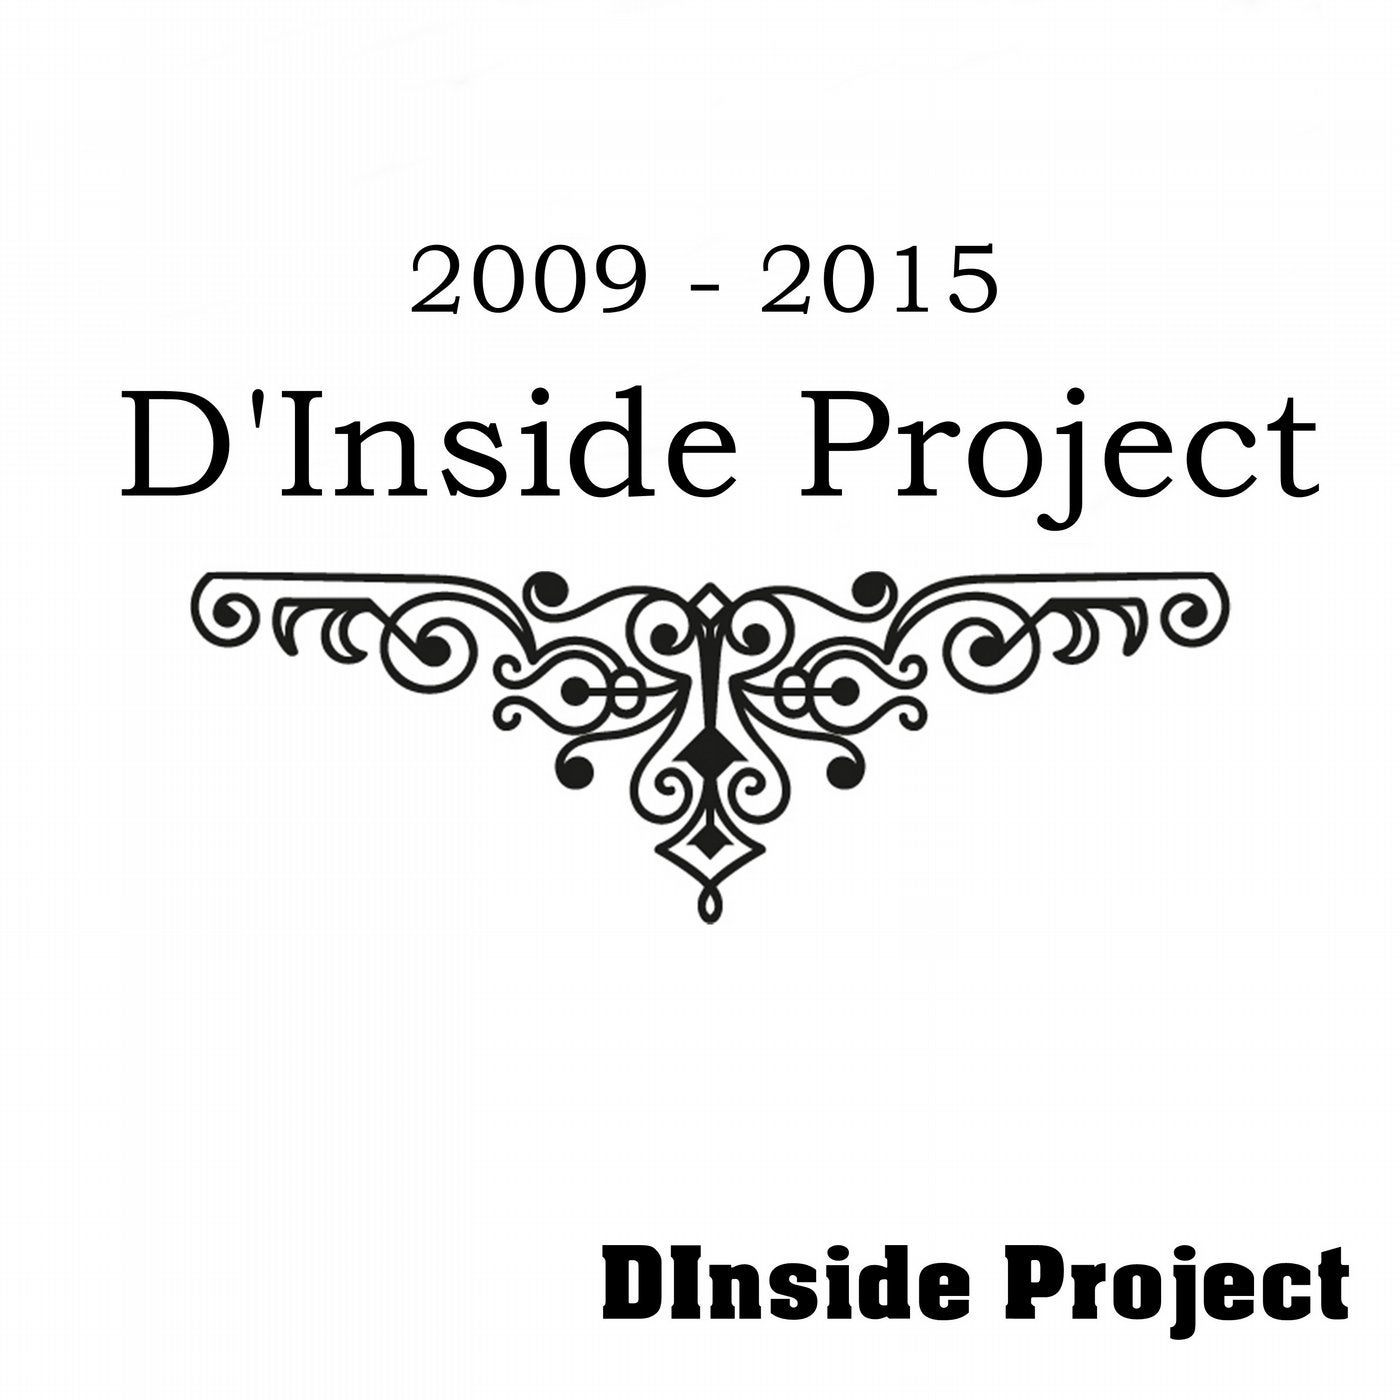 2009 - 2015 D'Inside Project